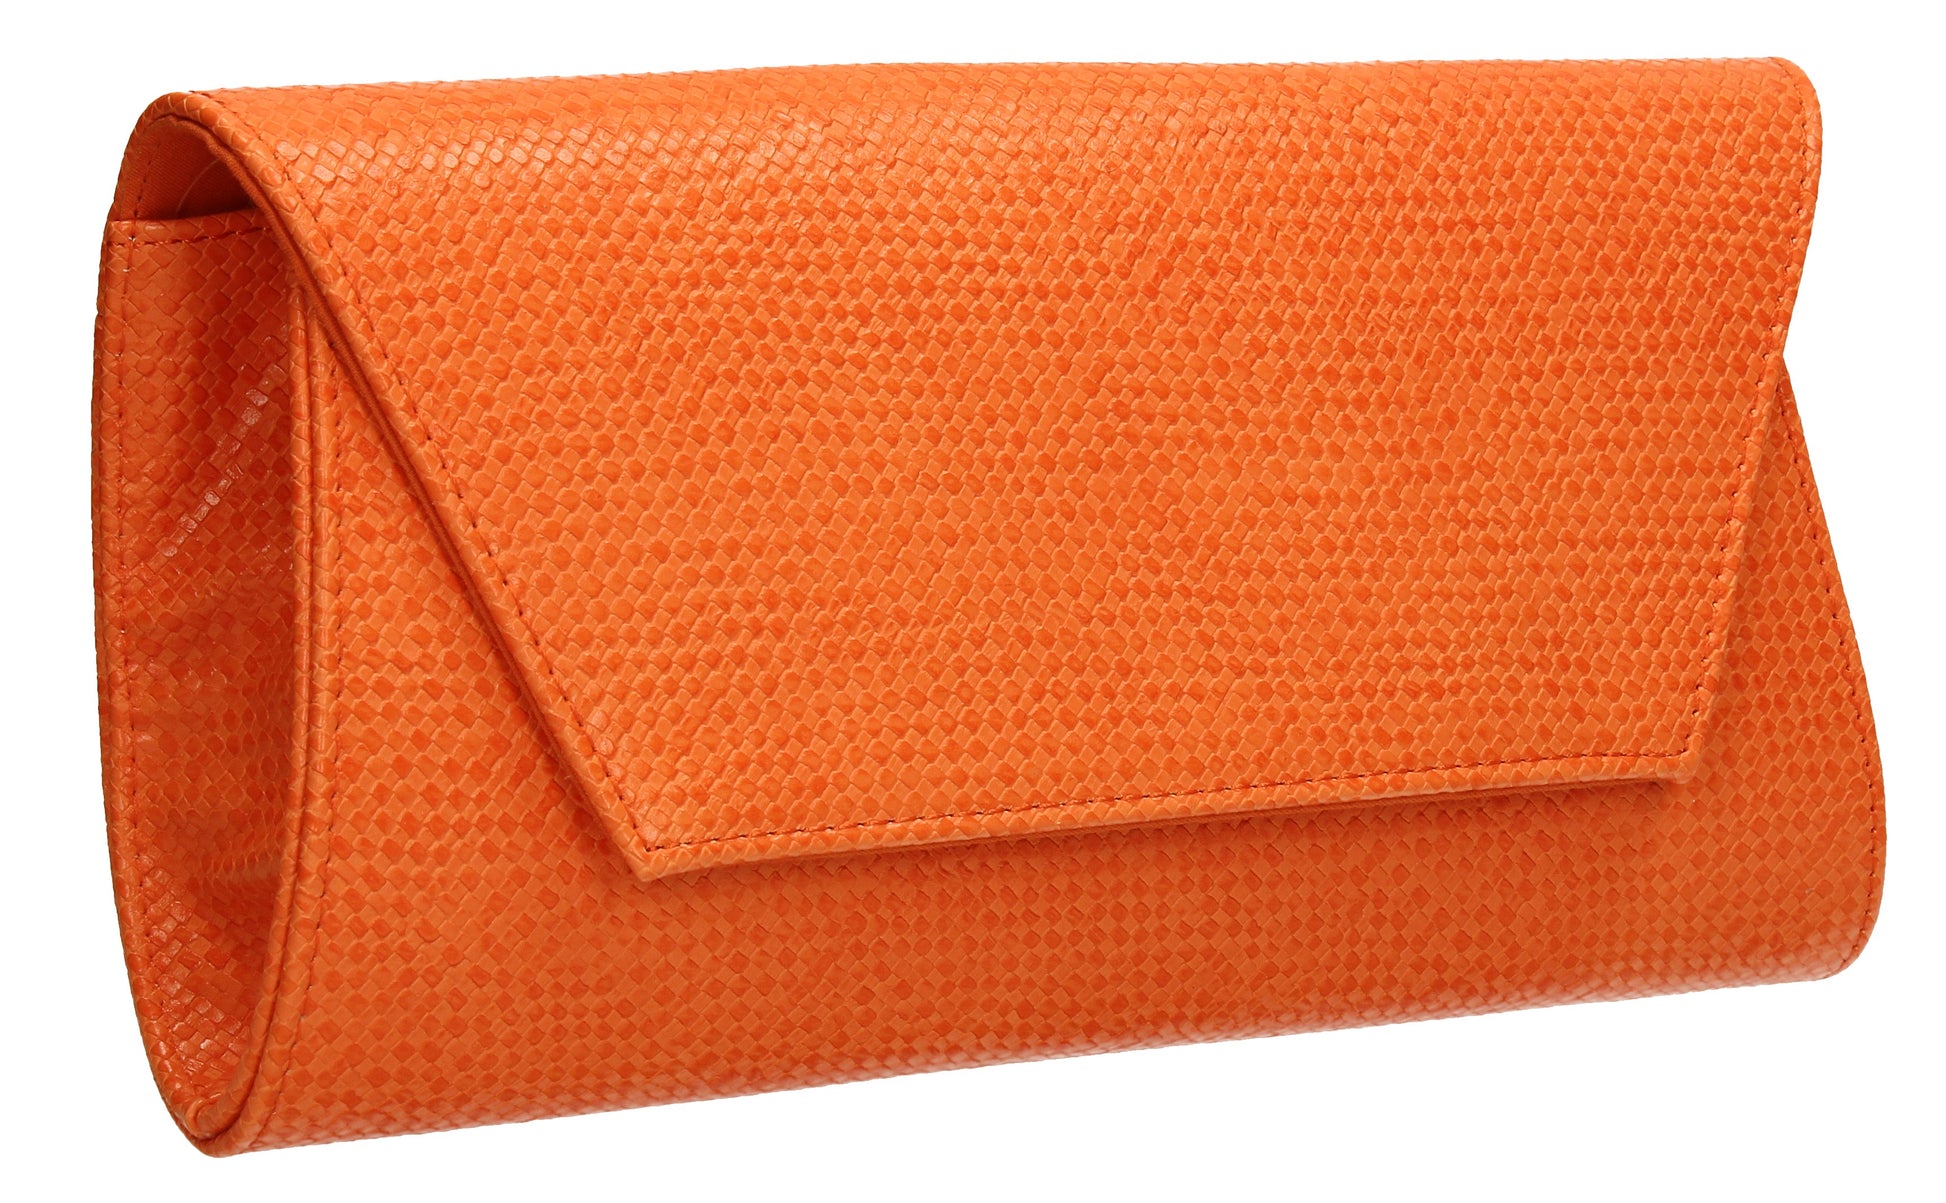 SWANKYSWANS Merci Micro Clutch Bag Scarlet Orange Cute Cheap Clutch Bag For Weddings School and Work